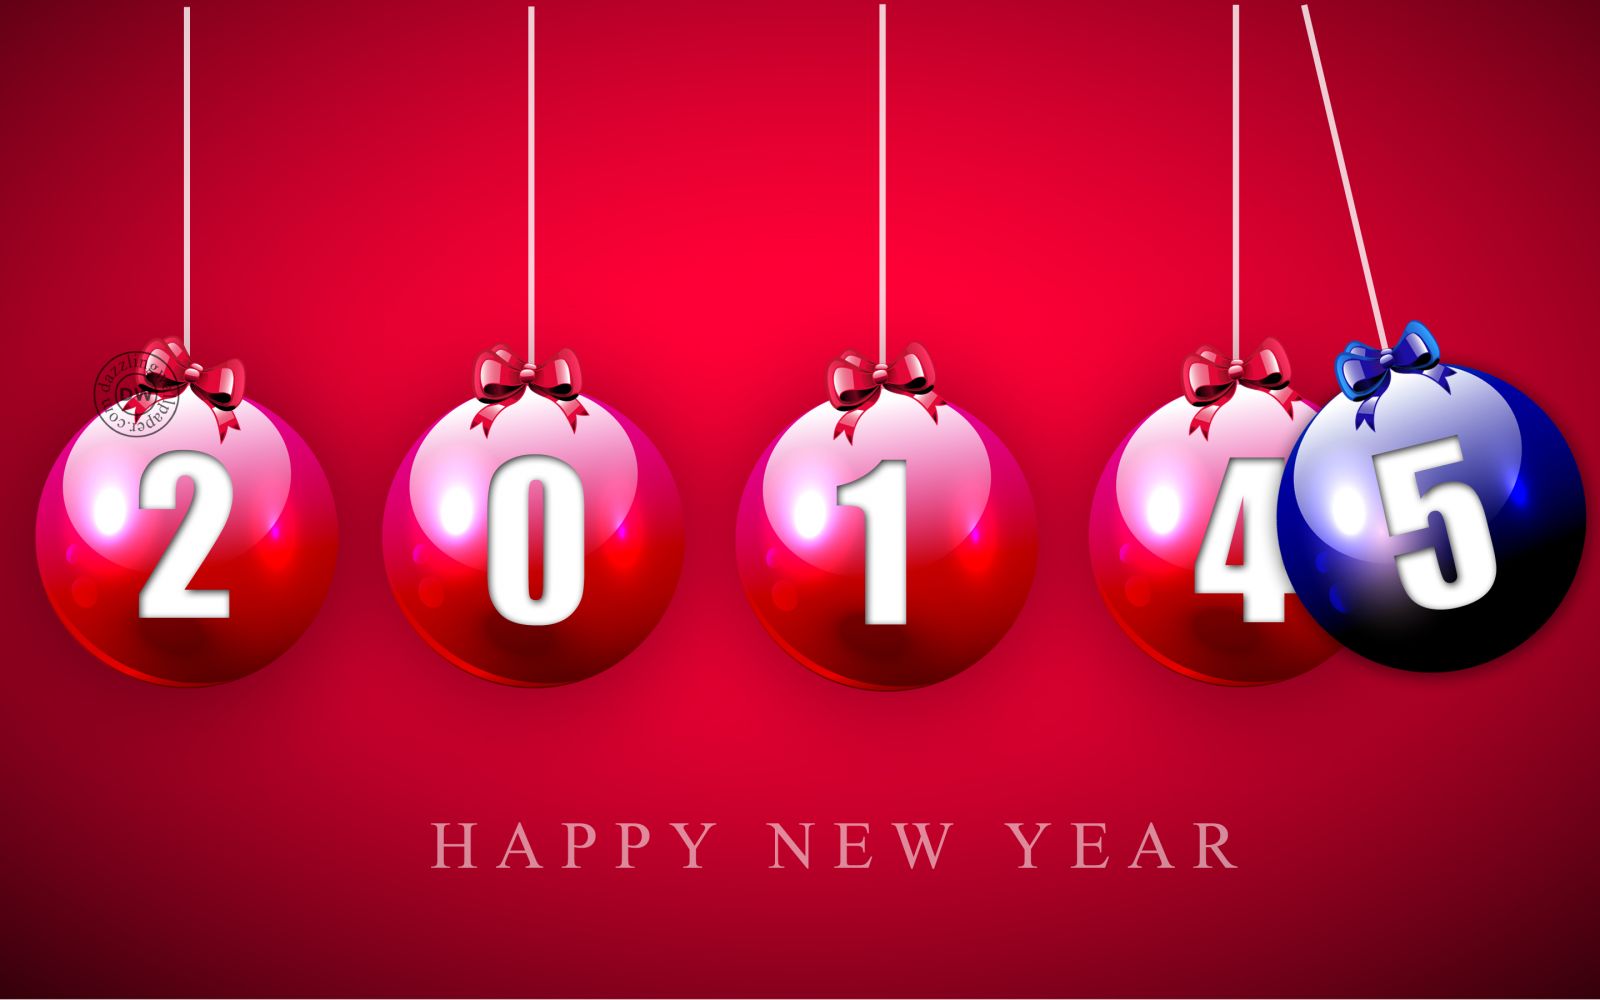 Happy New Year 2014 2015